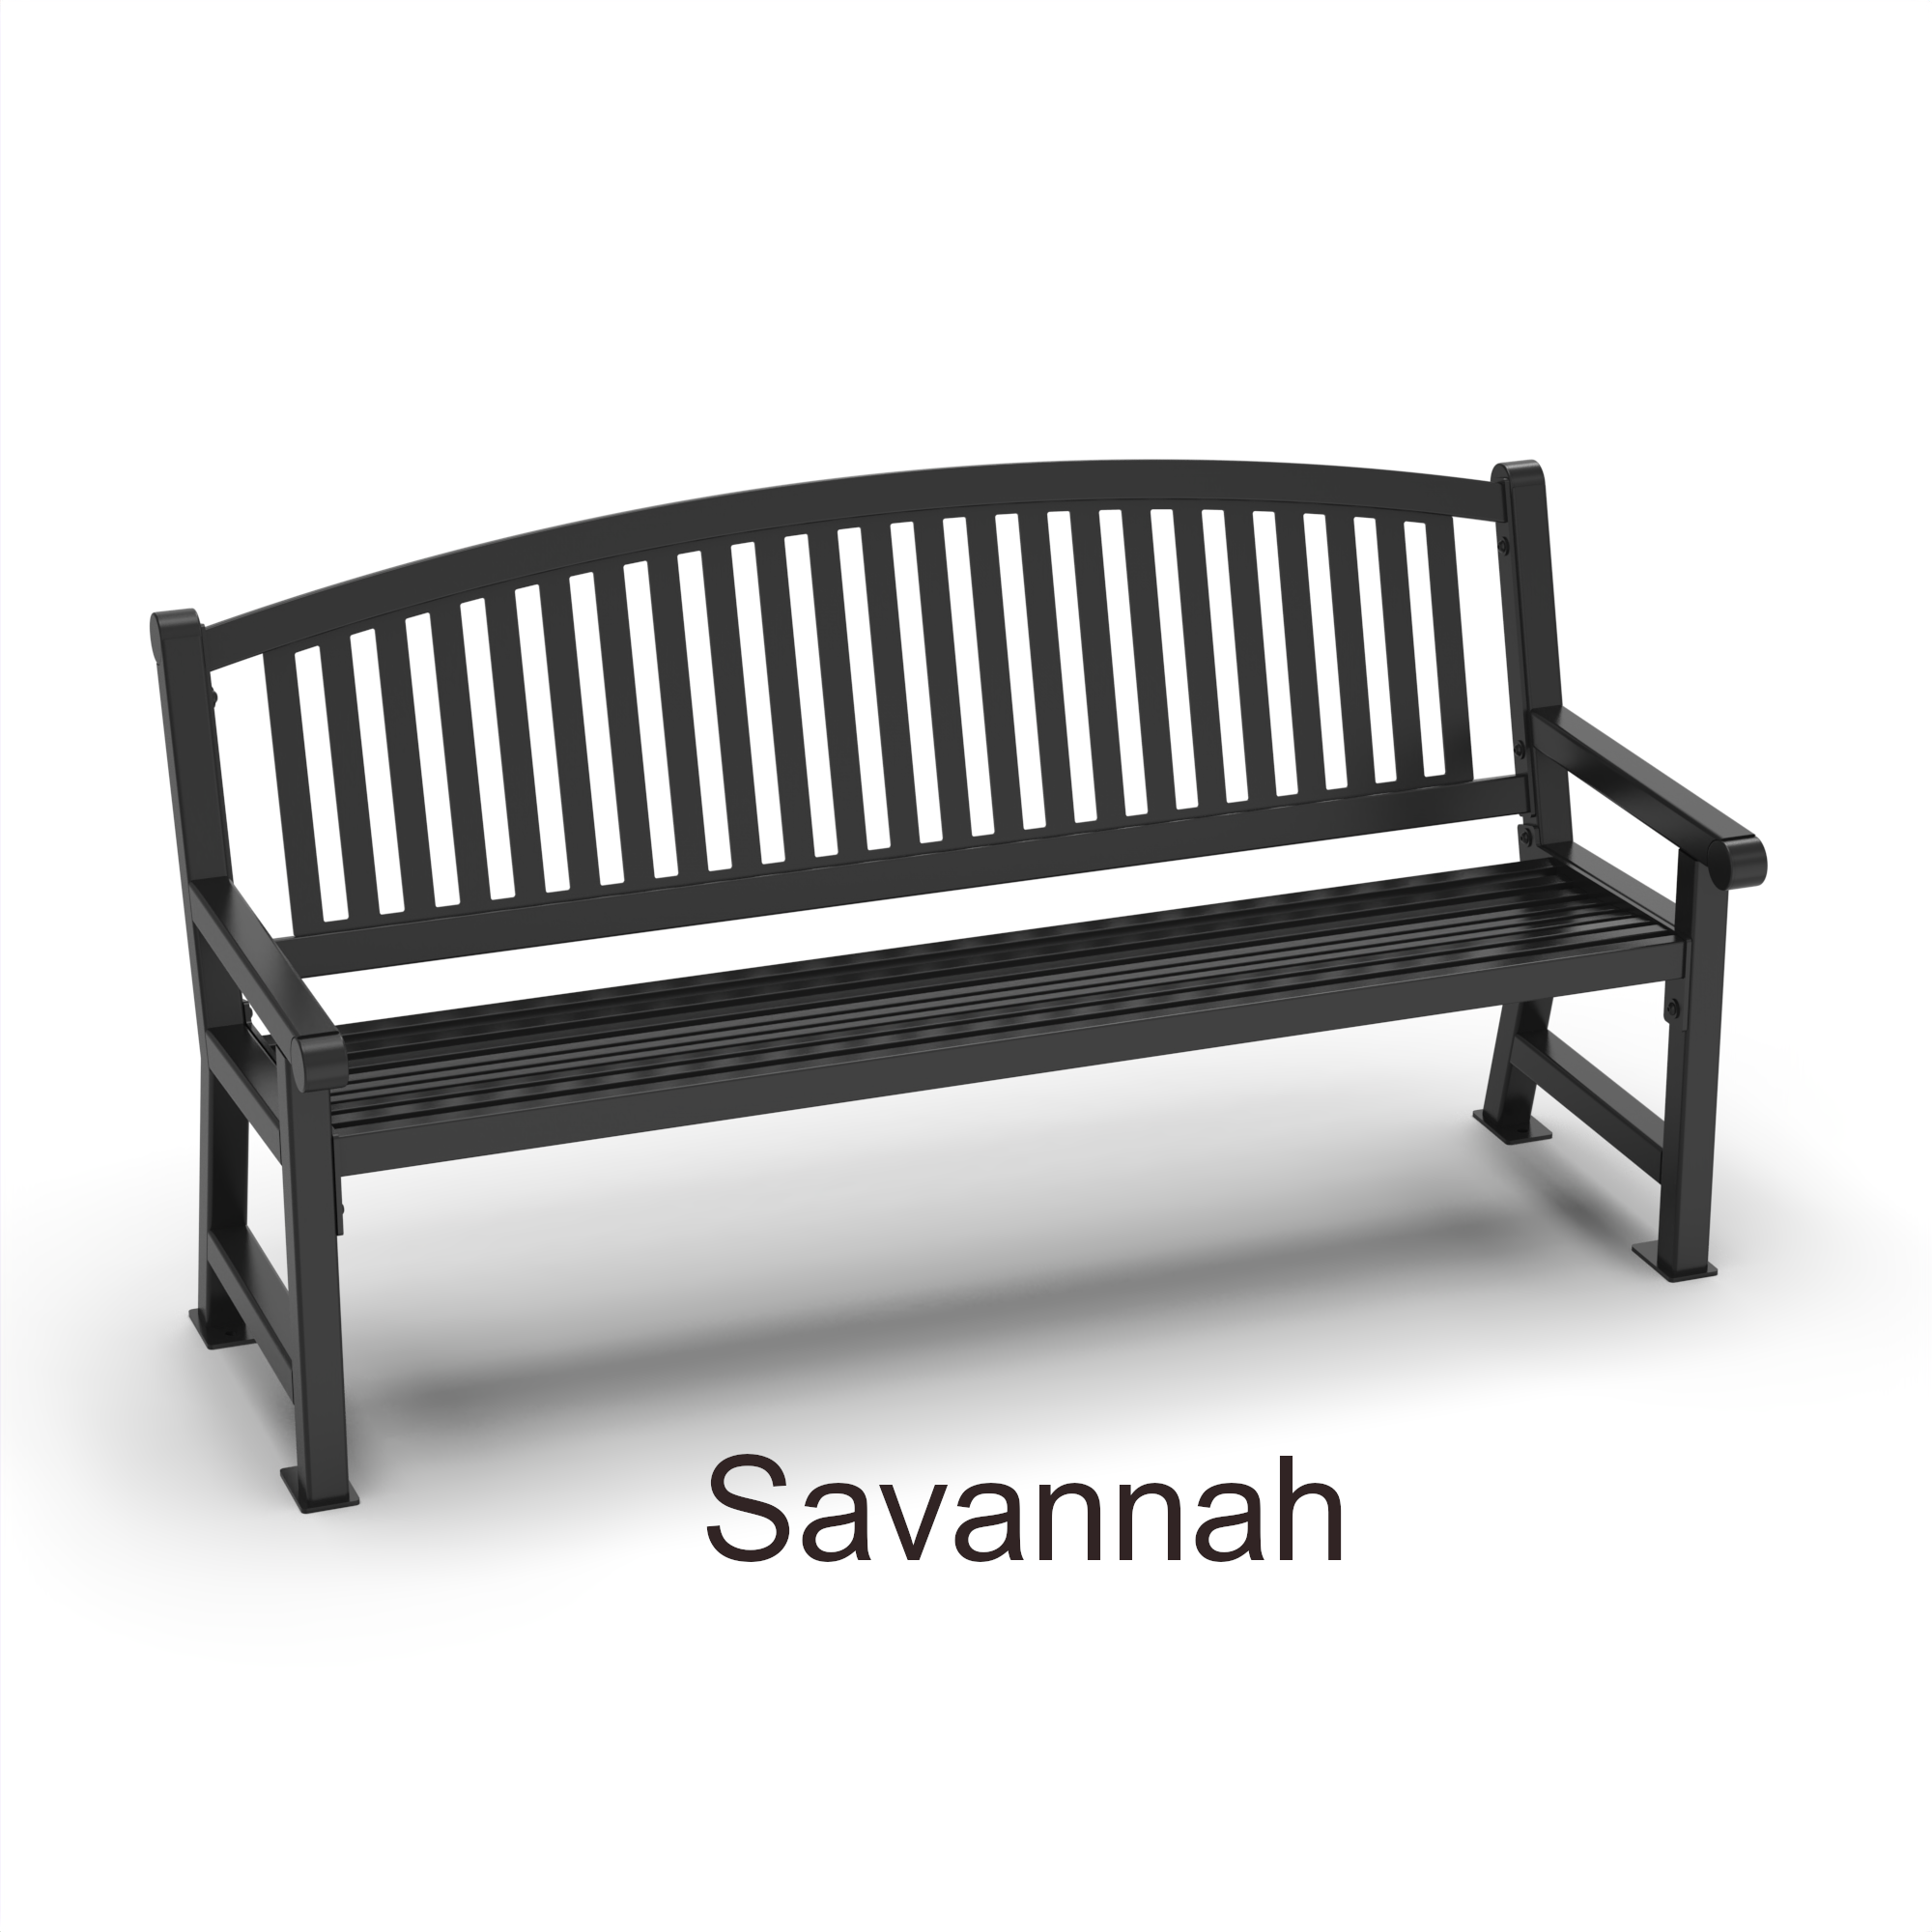 Savannah Steel Park Bench